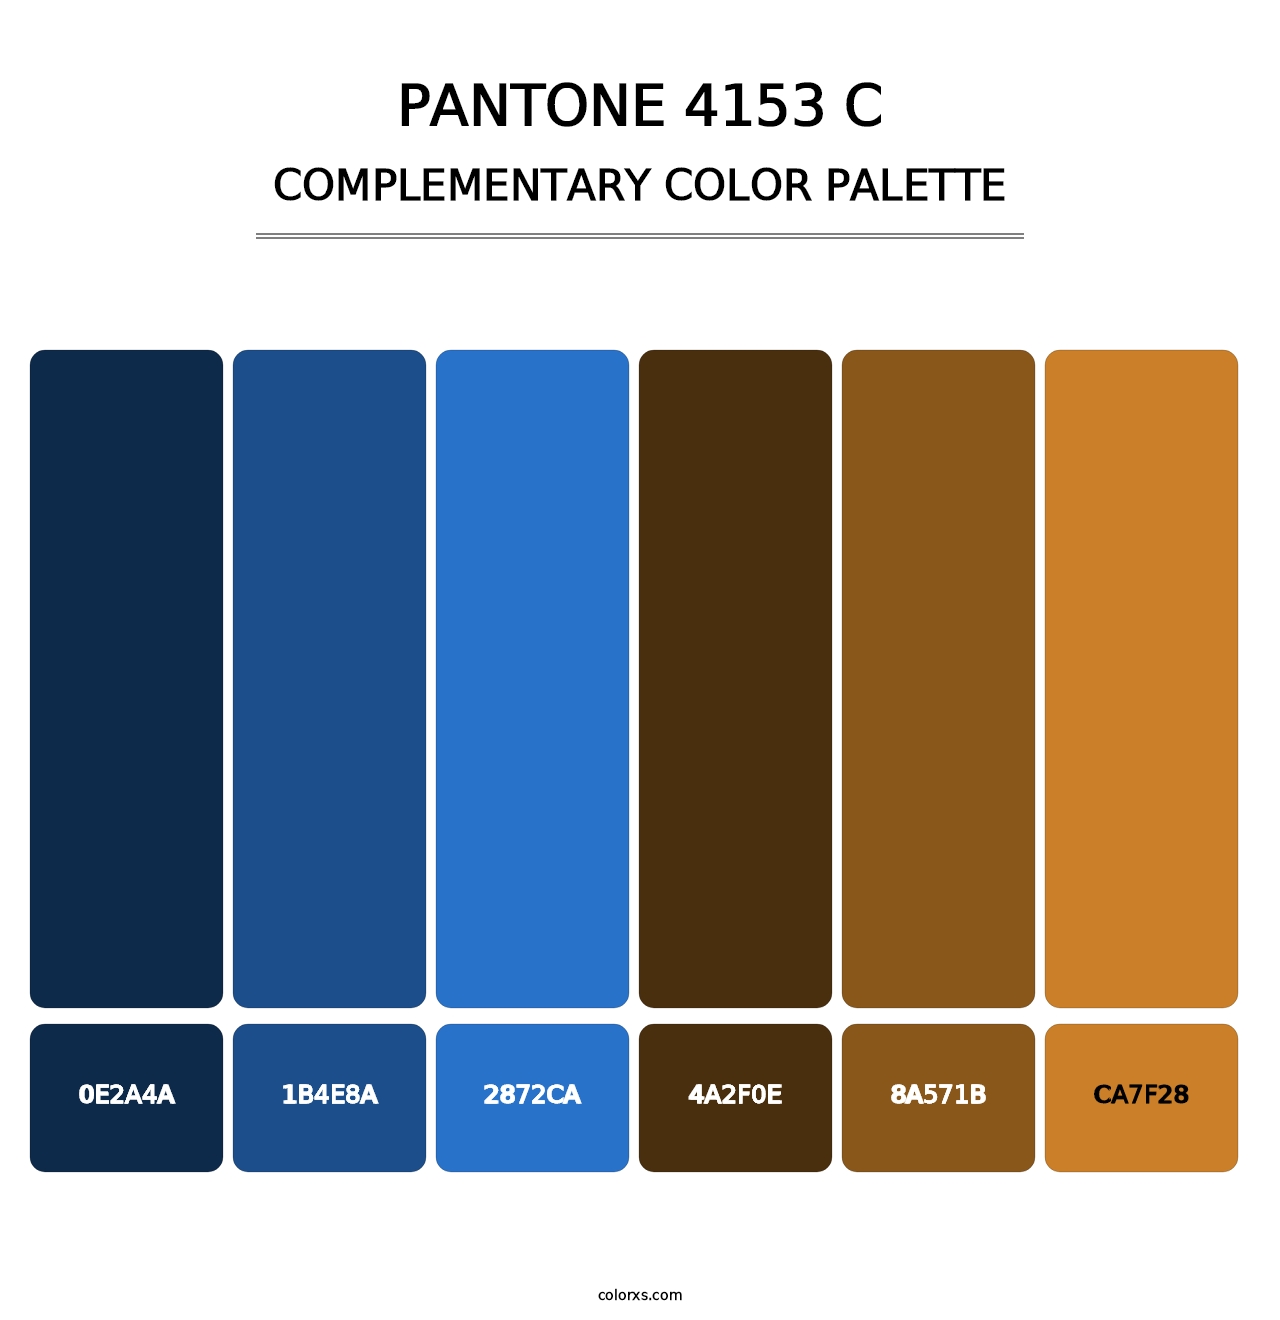 PANTONE 4153 C - Complementary Color Palette